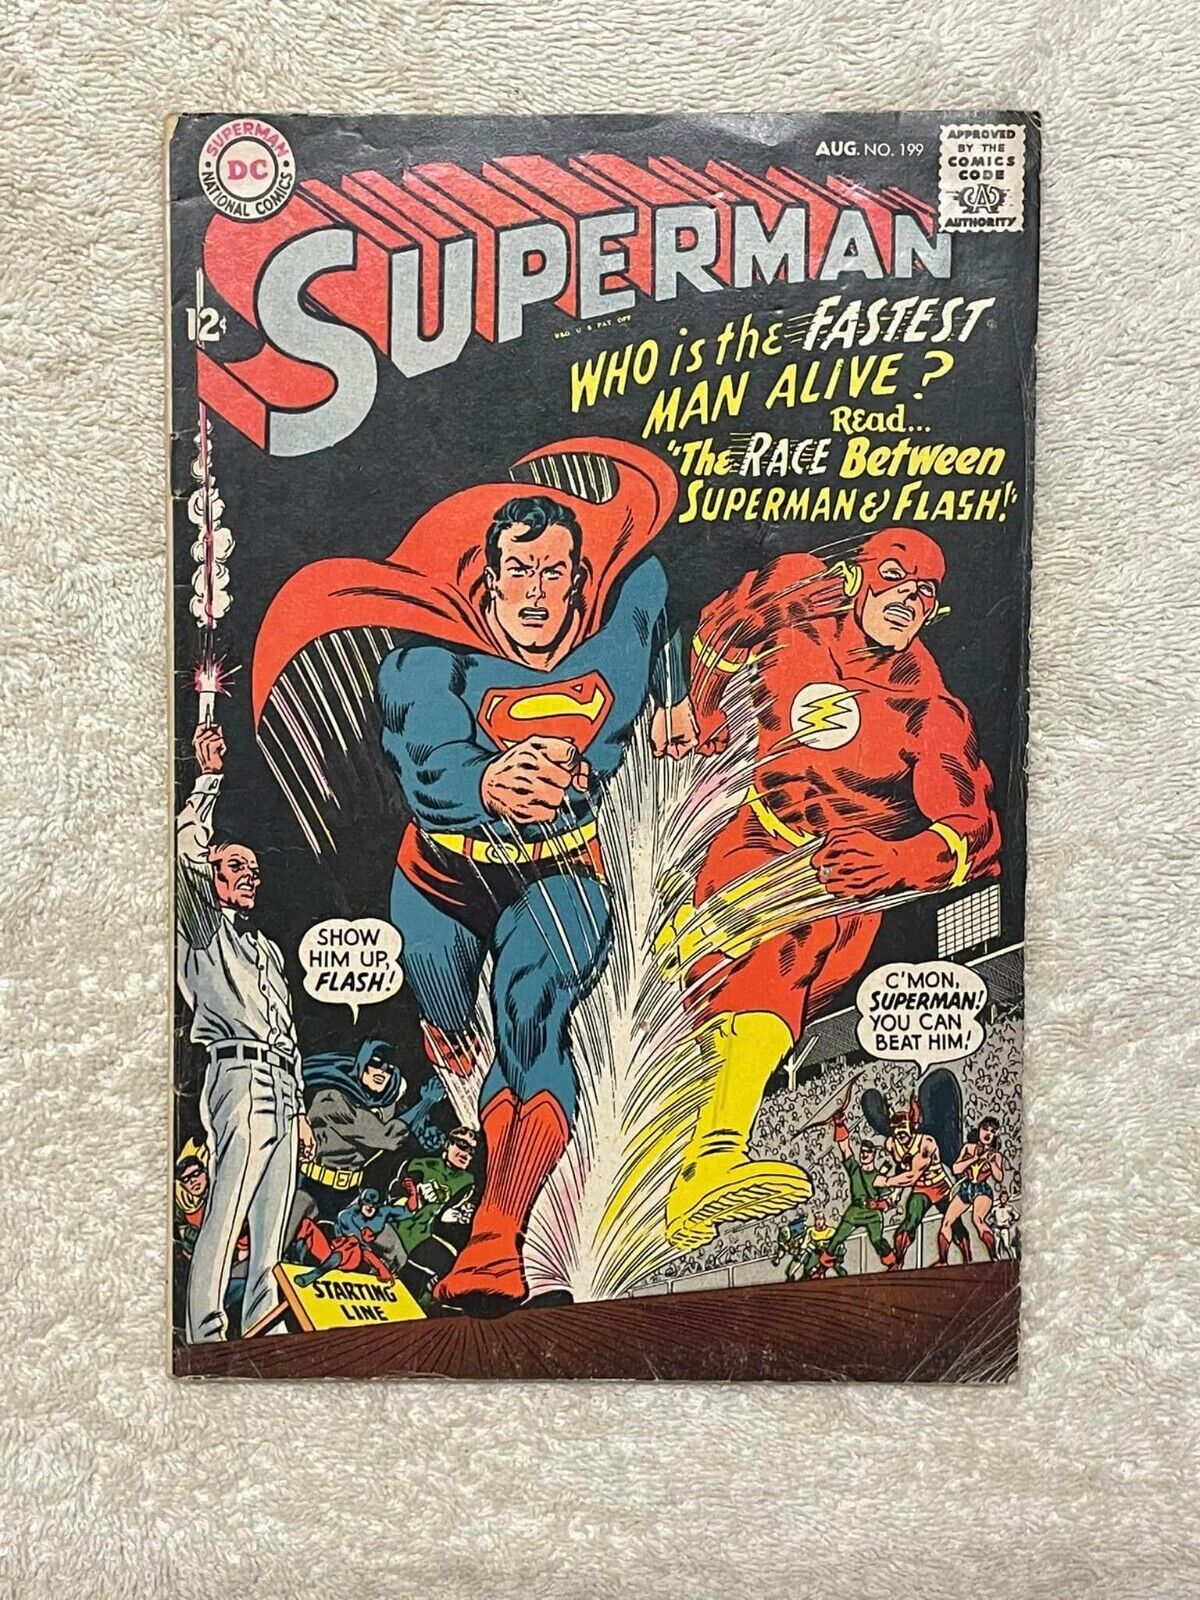 Superman #199 (RAW 5.0 - DC Comics 1967) 1st Race Superman vs. Flash